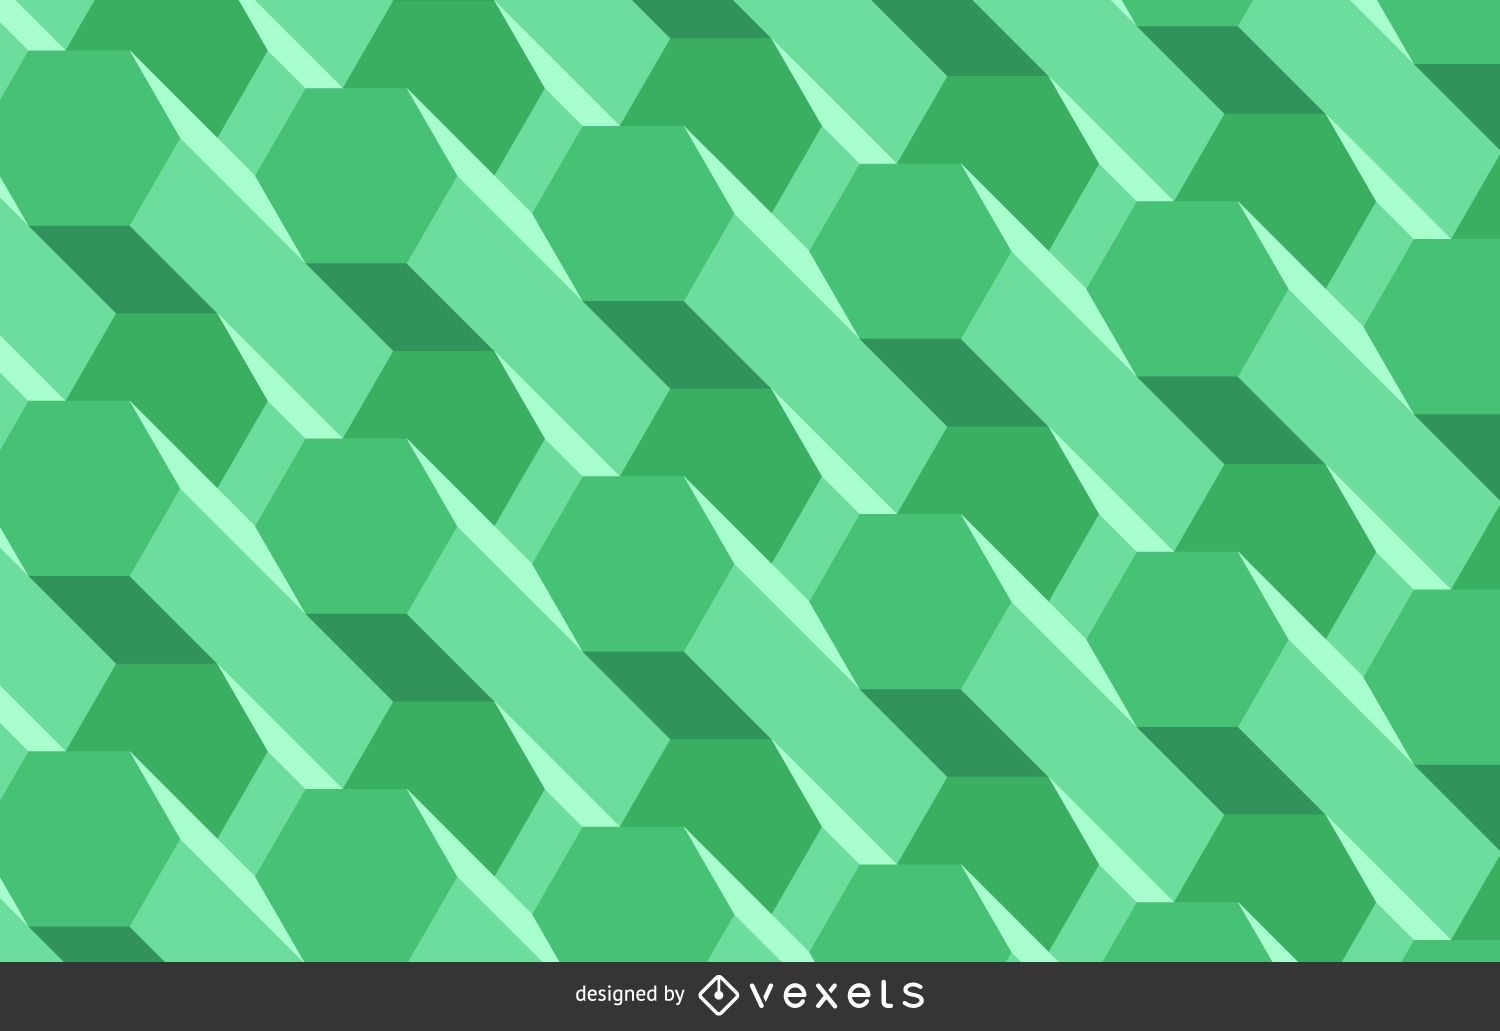 Abstrakter grüner polygonaler Hintergrund